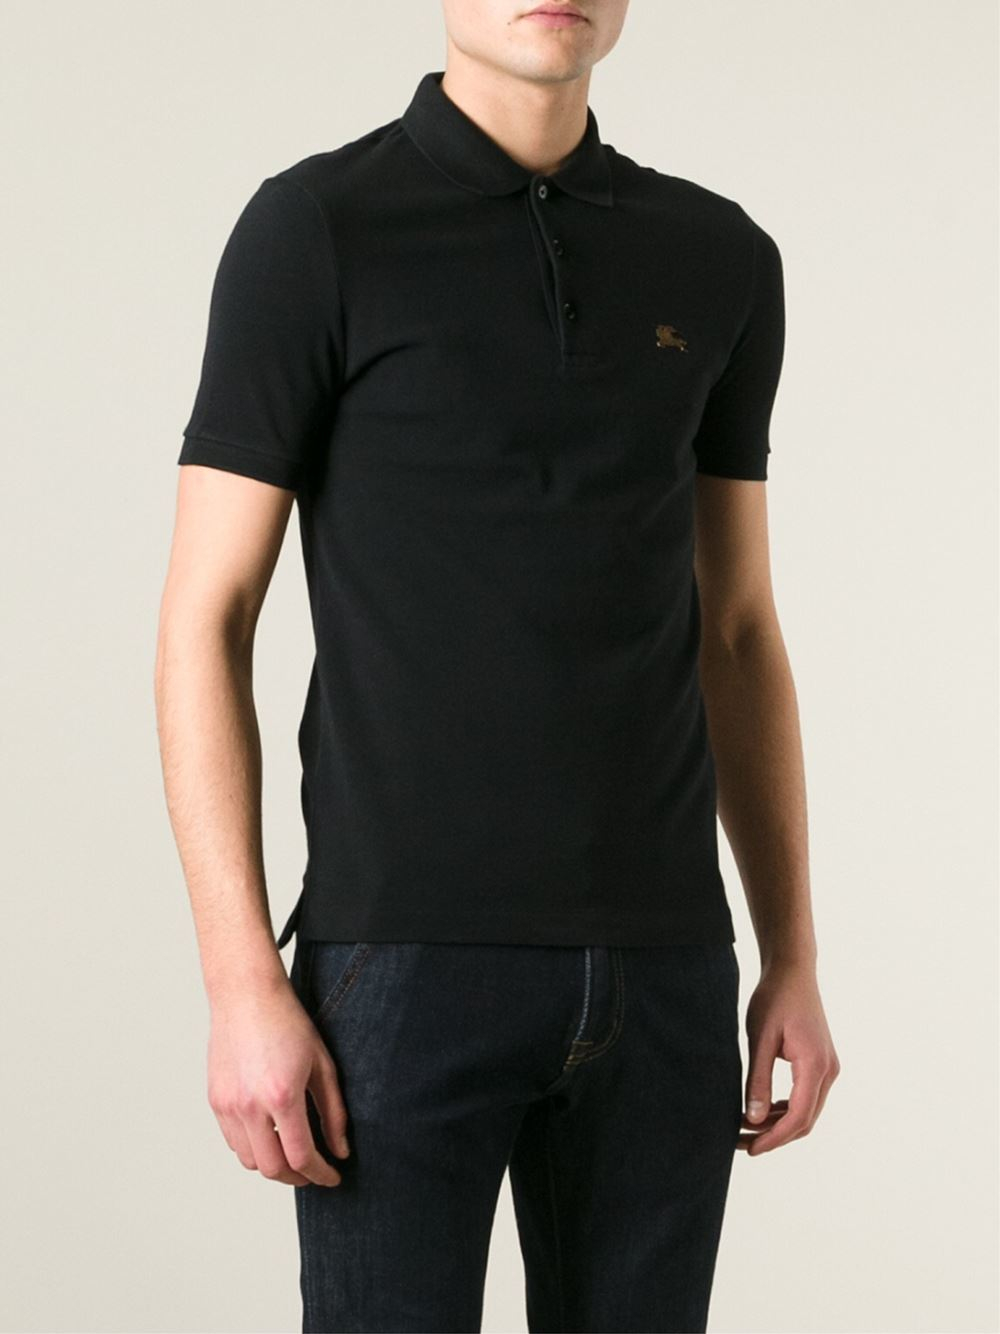 Lyst - Burberry Brit Chest Logo Polo Shirt in Black for Men